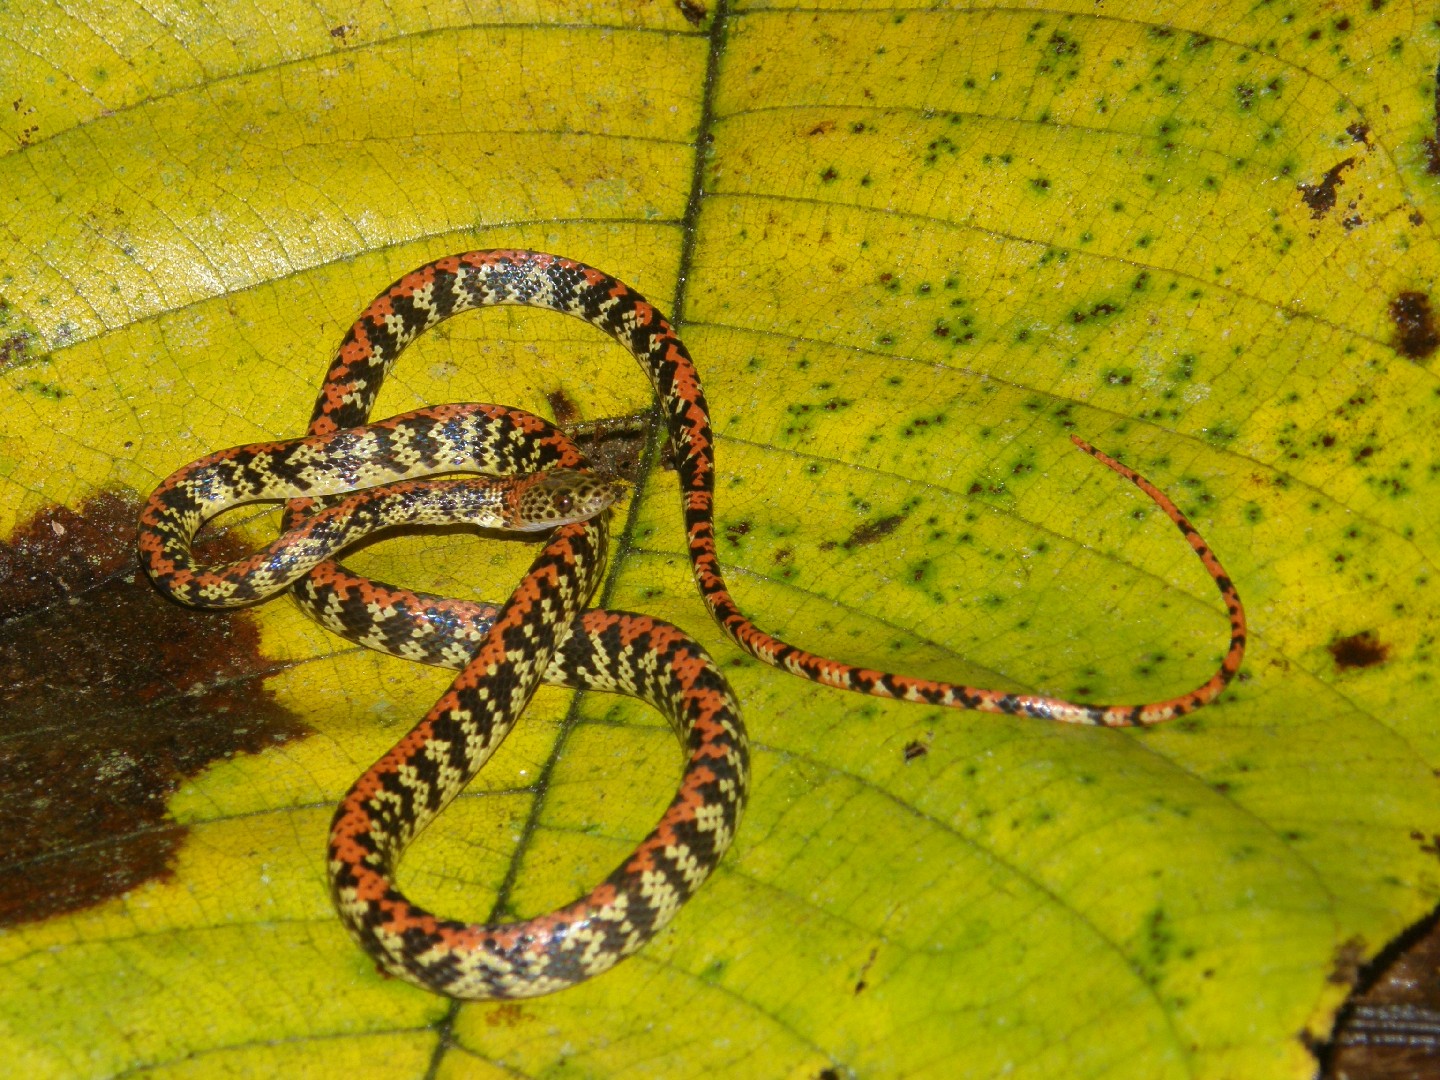 Panama spotted night snake (Siphlophis cervinus)